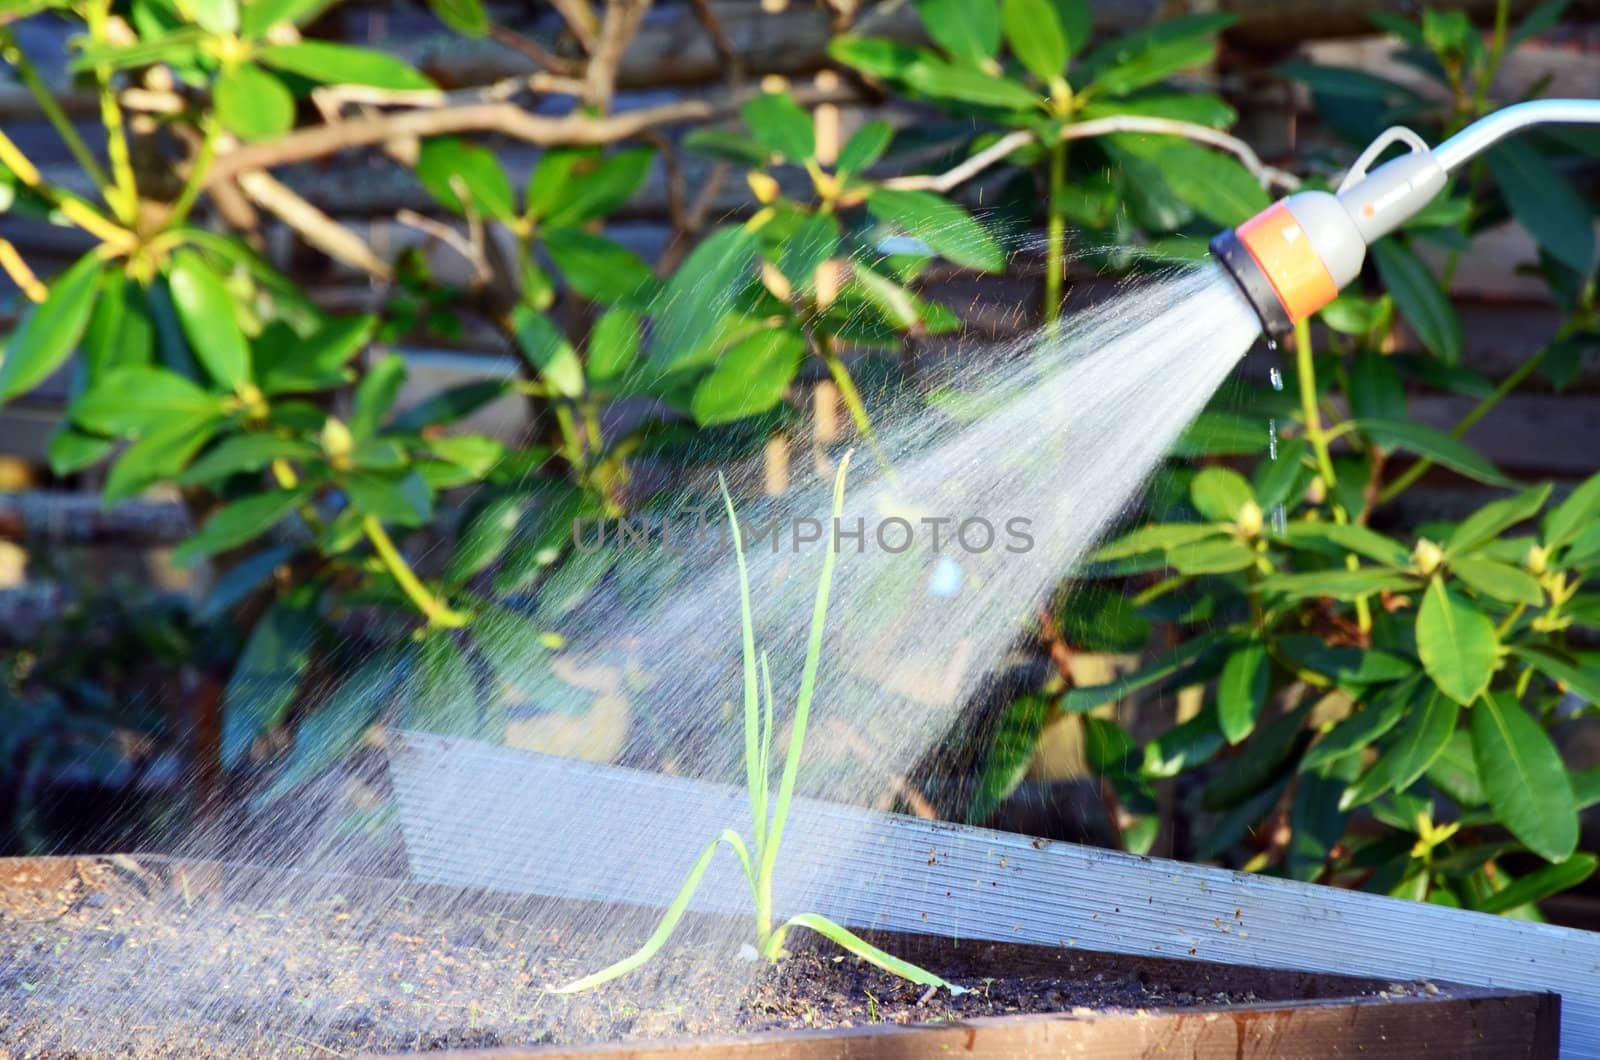 Irrigation by ljusnan69